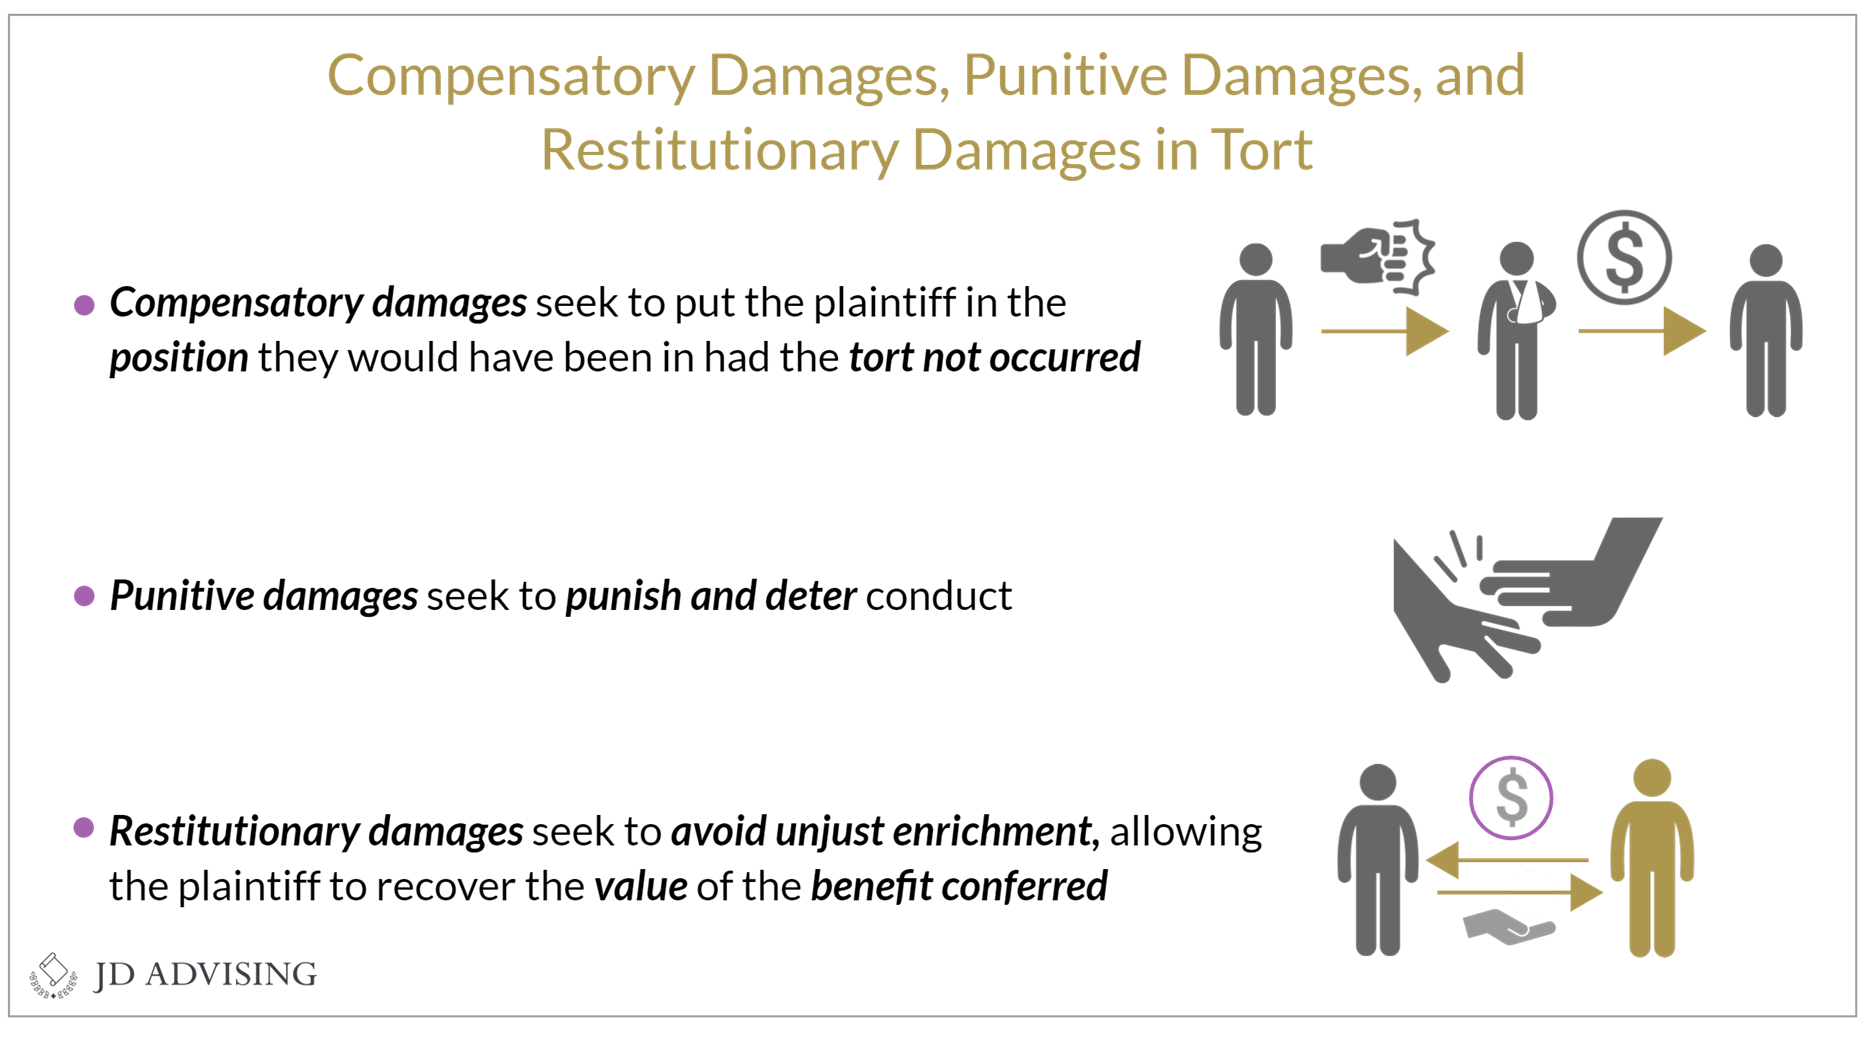 Compensatory Punitive Restitutionary Damages